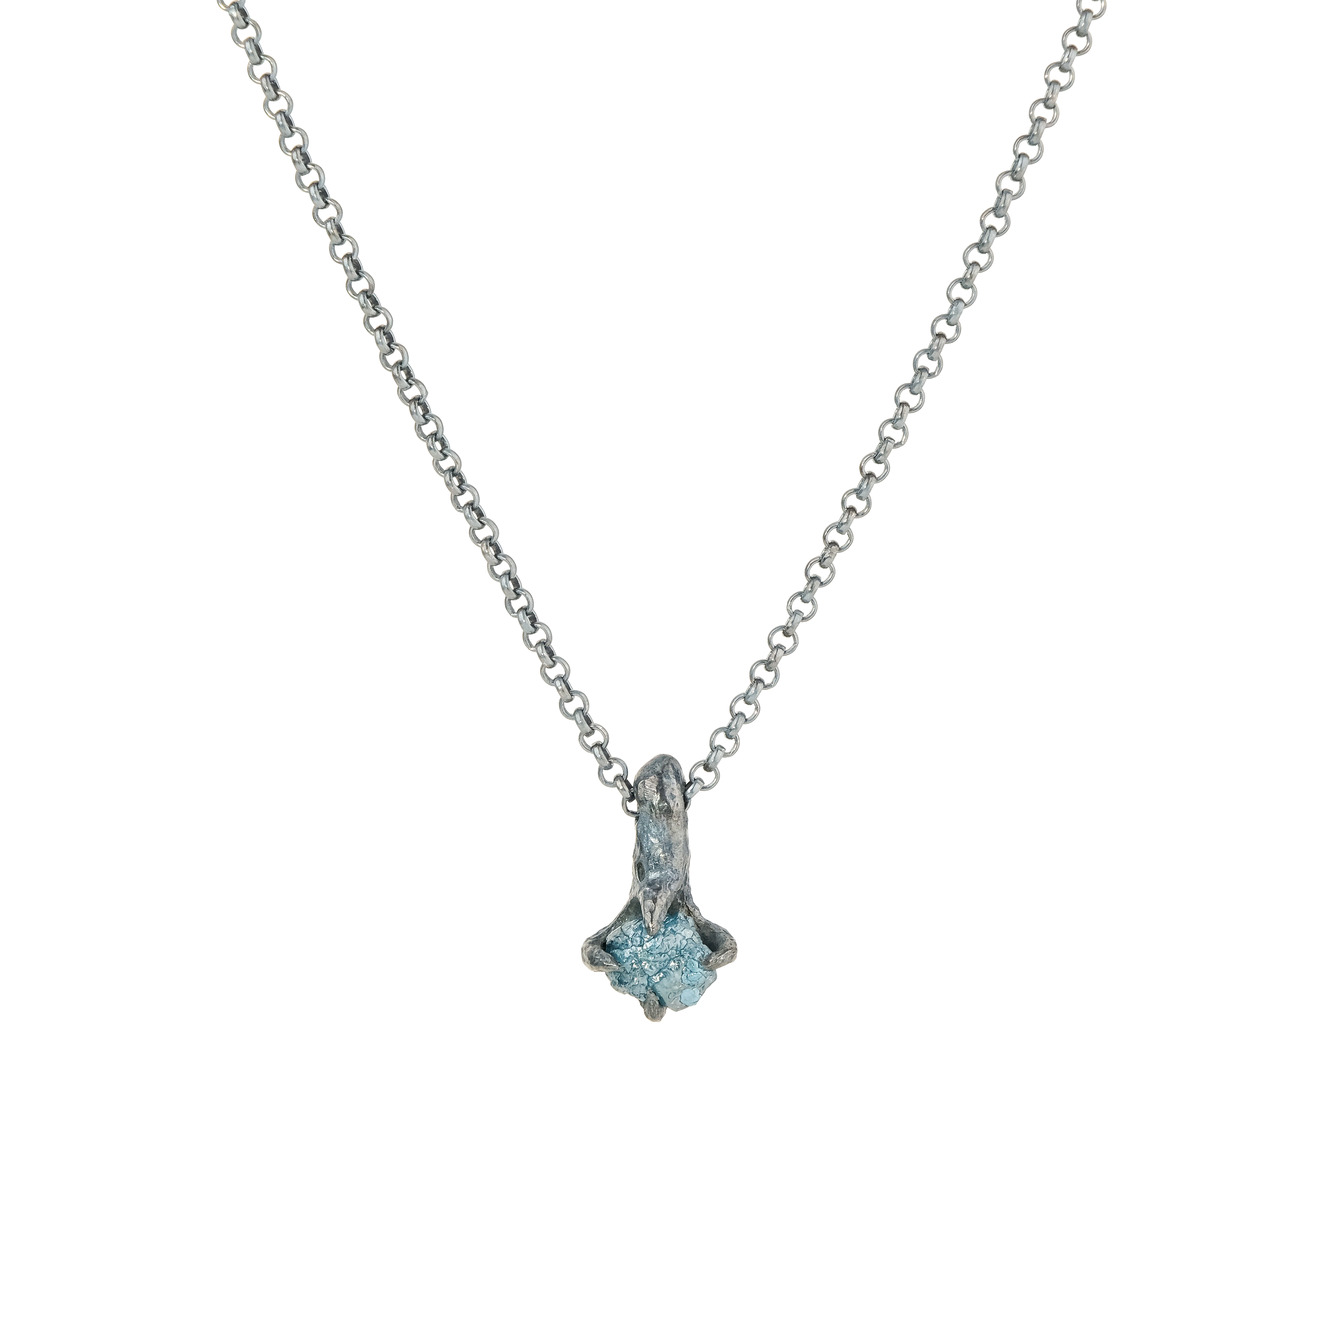 Kintsugi Jewelry Кулон Patience из серебра с кристаллом кварца кольцо с каплей розового кварца secrets jewelry